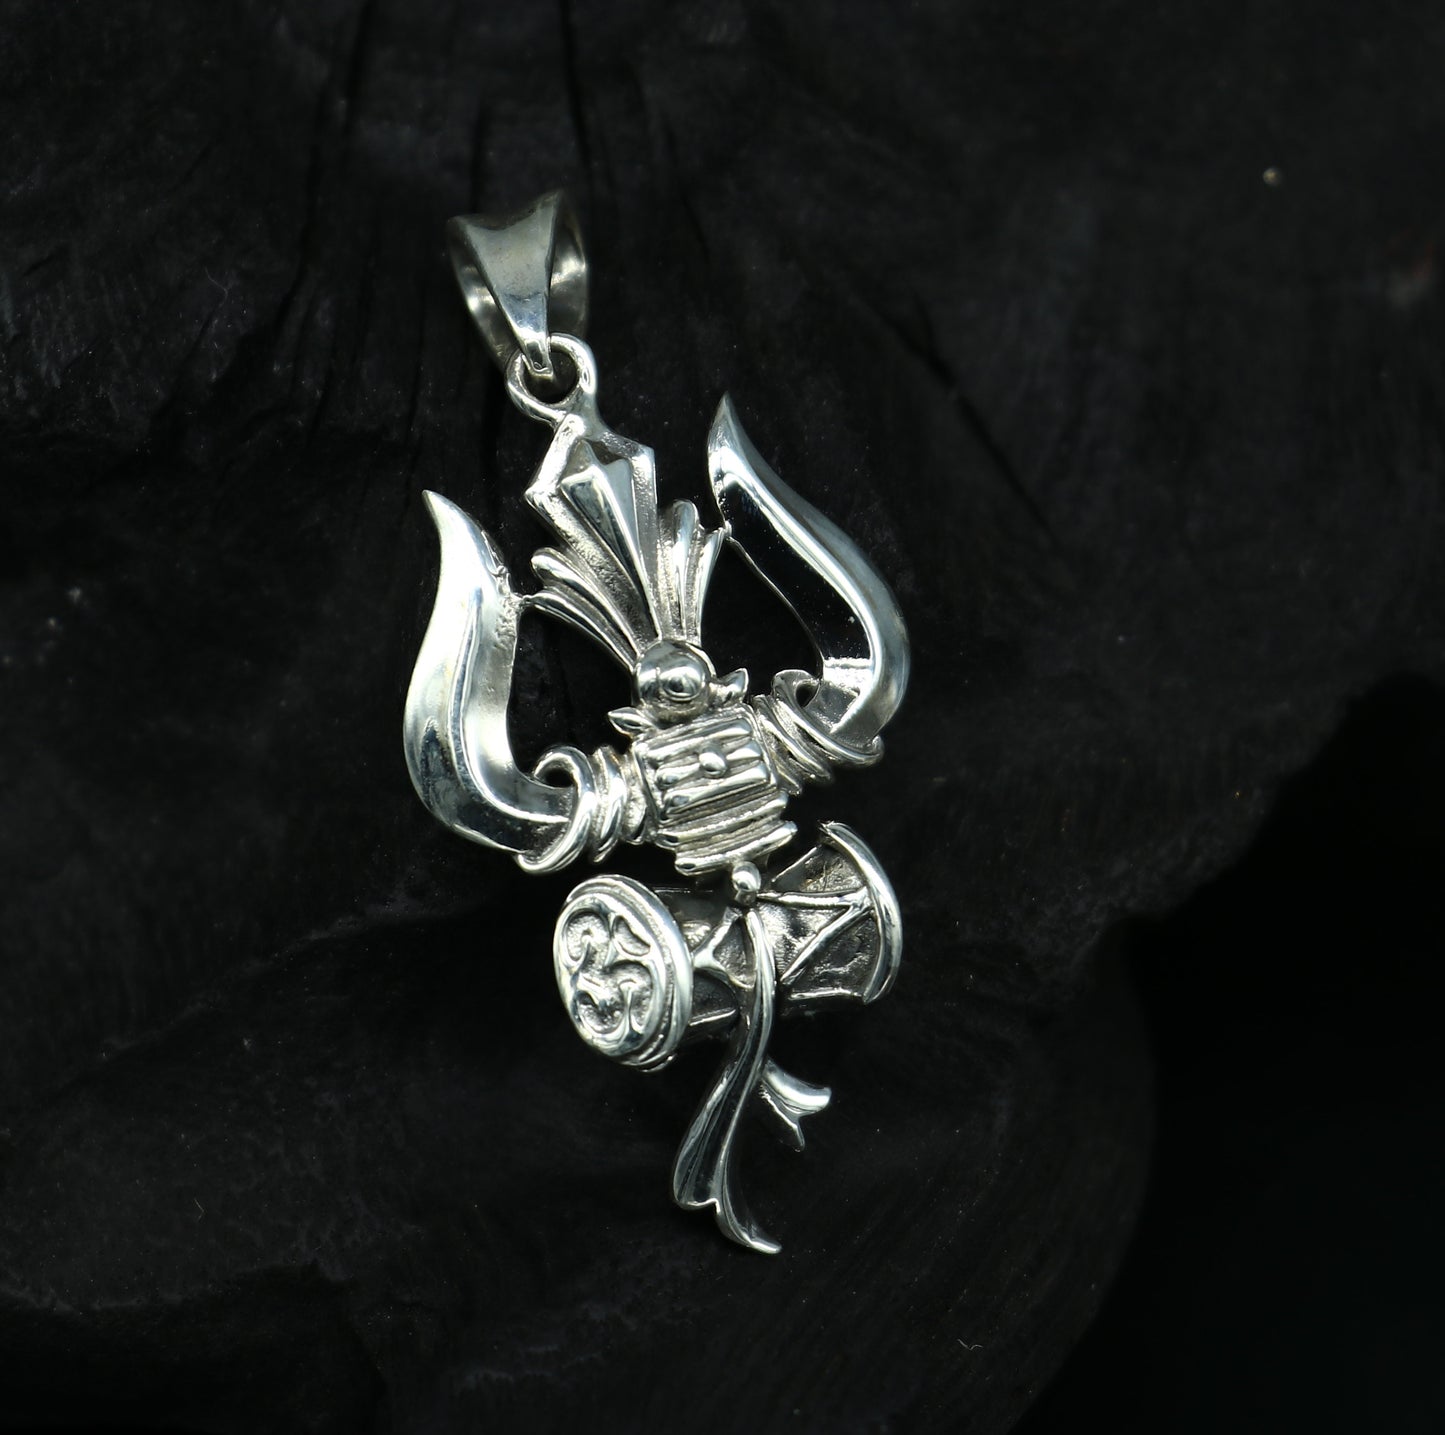 925 sterling silver Hindu idol Lord Shiva trident pendant, amazing vintage design gifting pendant customized god jewelry ssp524 - TRIBAL ORNAMENTS